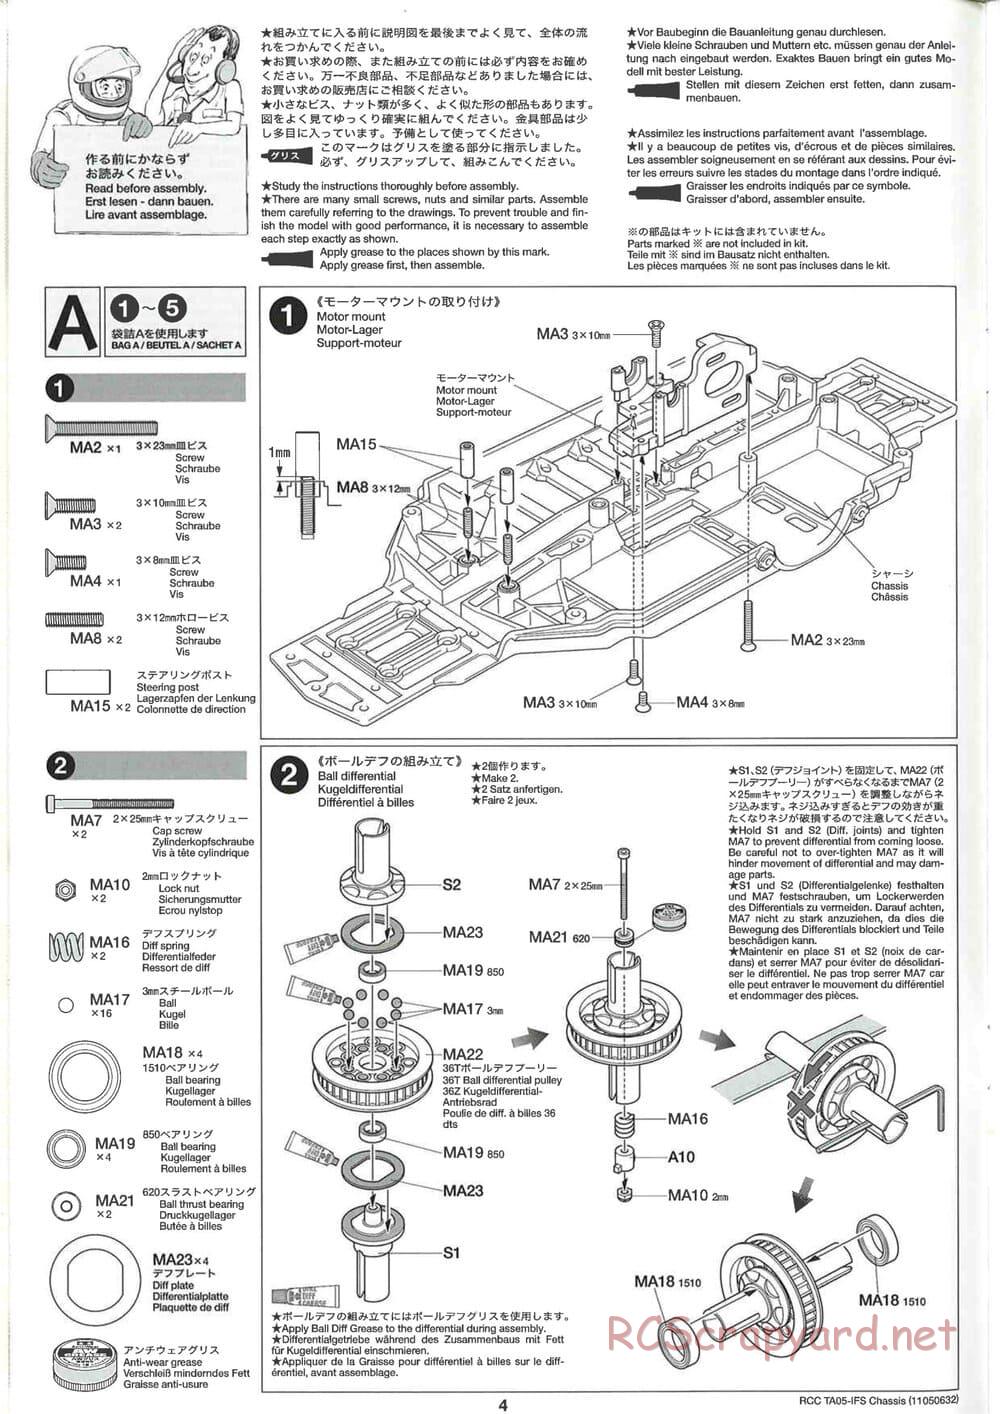 Tamiya - TA05-IFS Chassis - Manual - Page 4